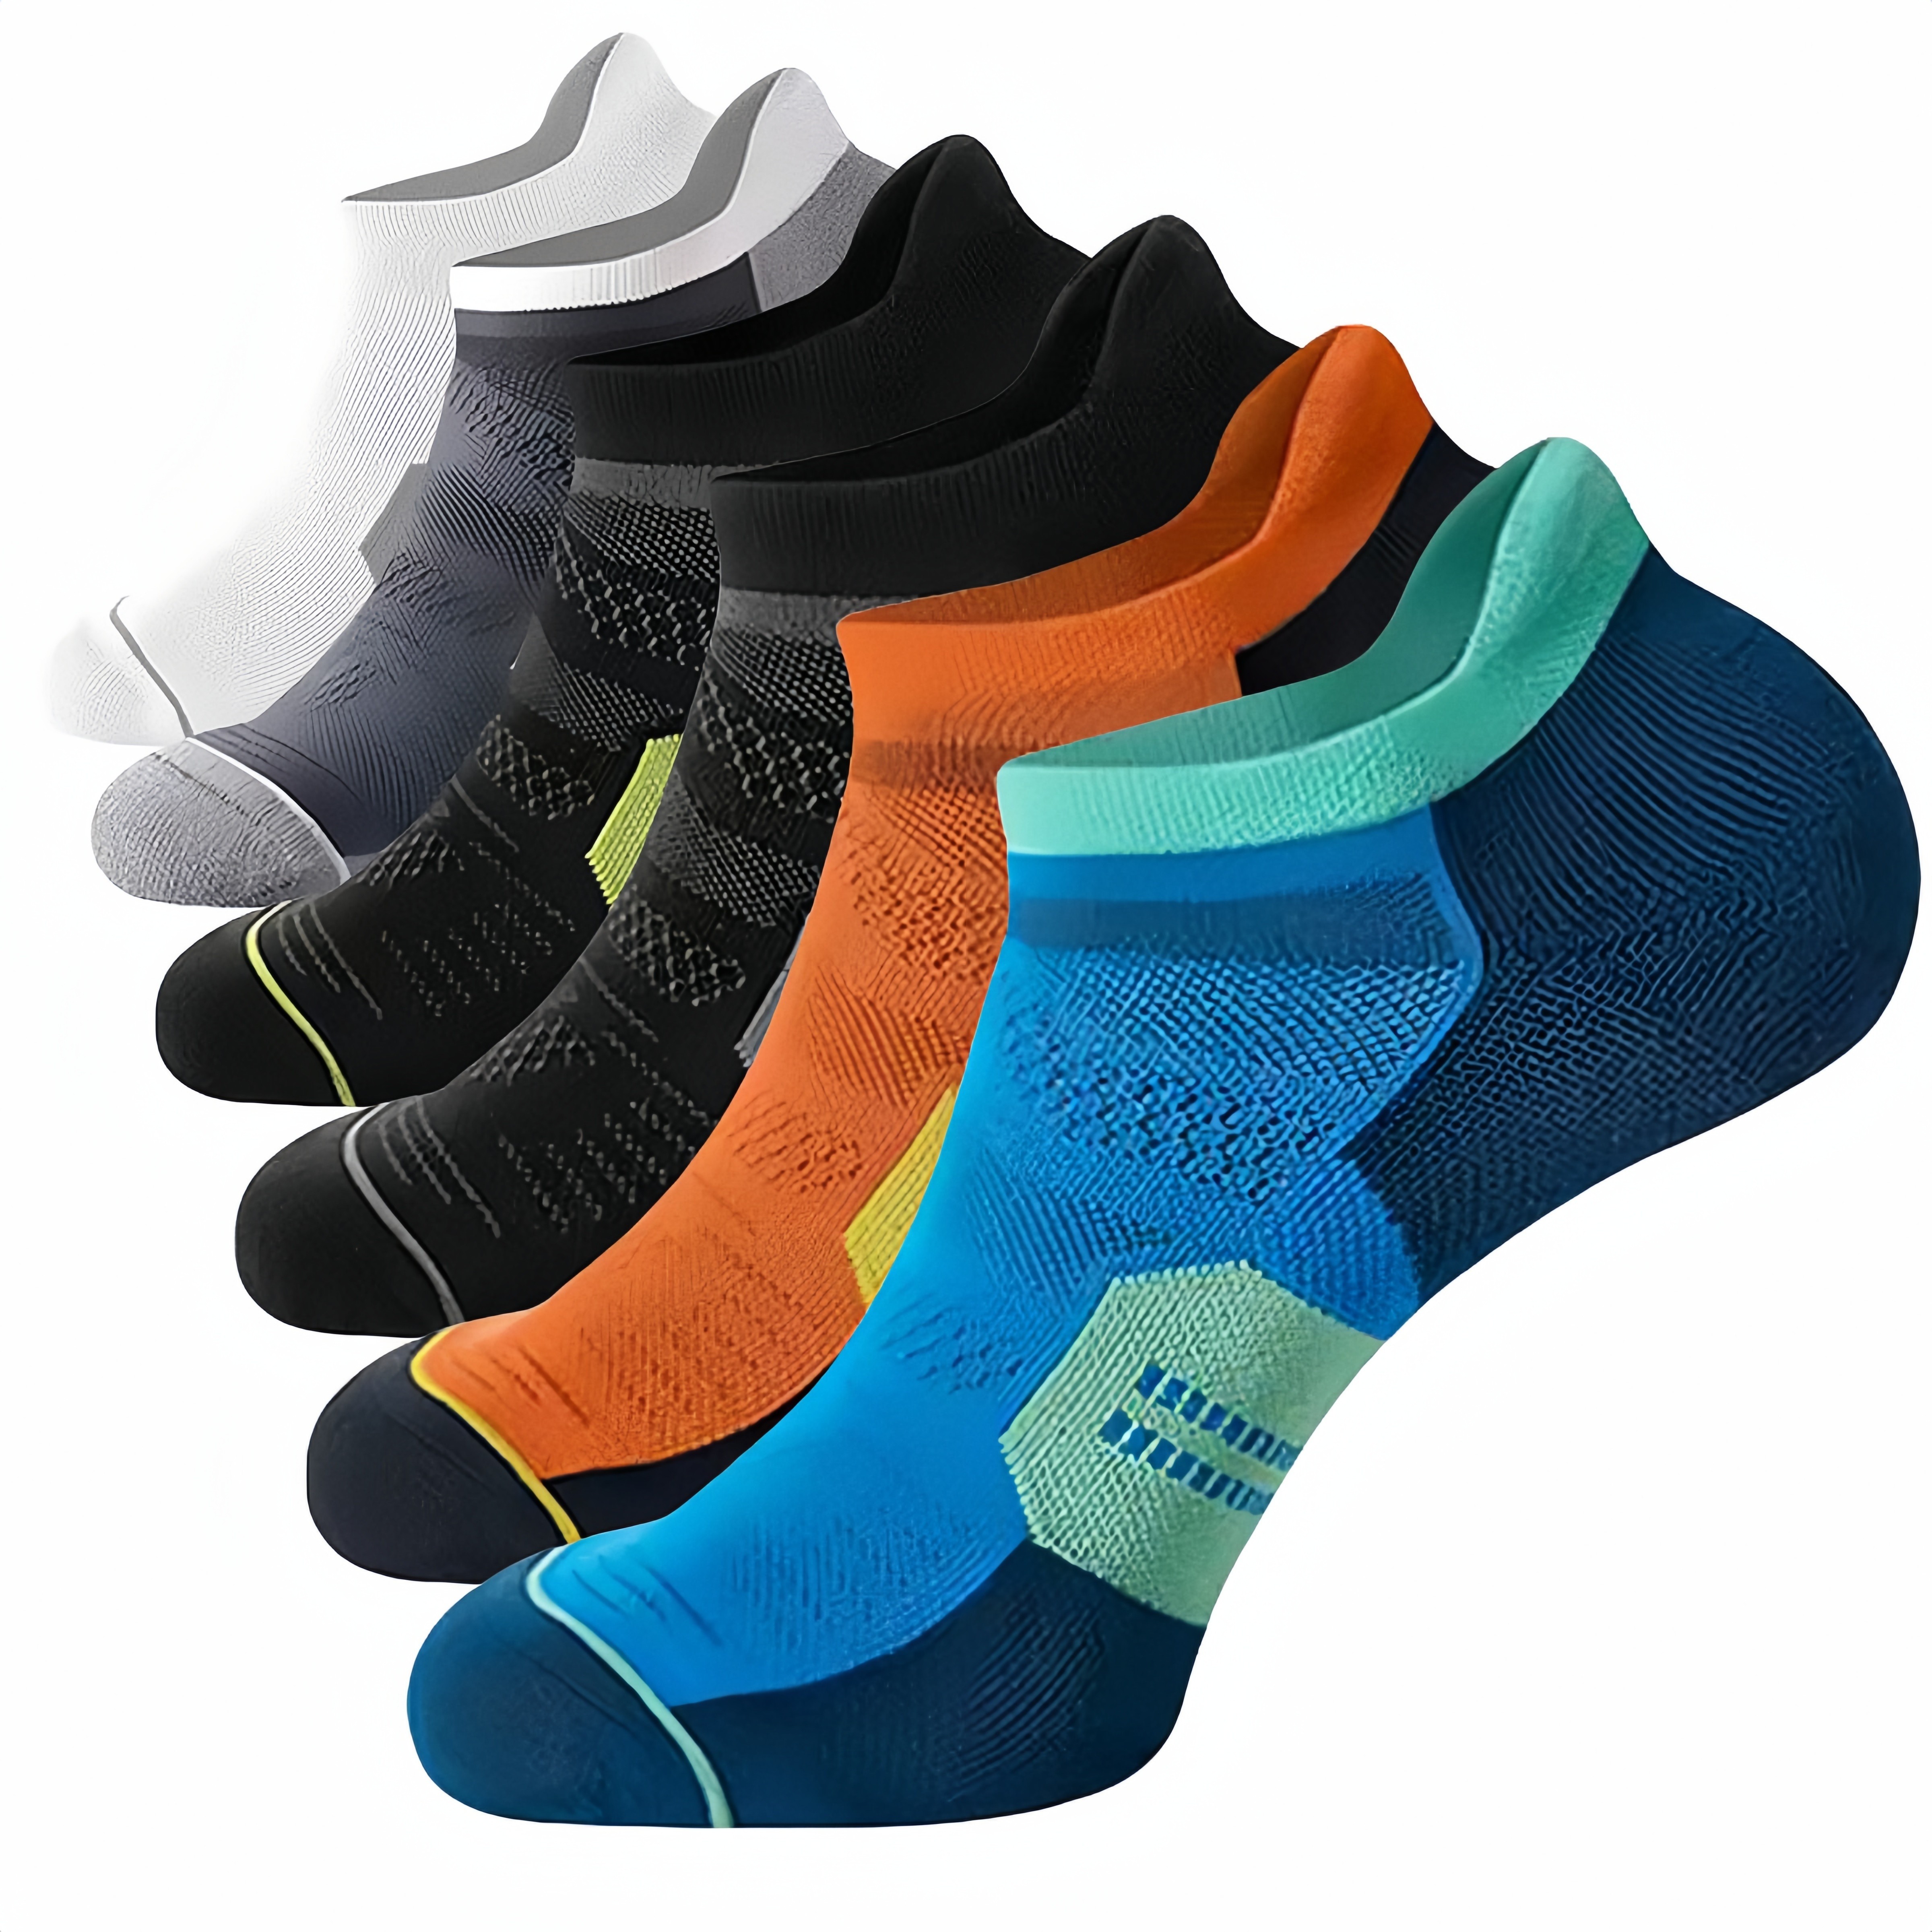 

6 Pairs Of Men's Low Cut Ankle Socks, Anti Odor & Sweat Absorption Breathable Elastic Sport Socks, For Outdoor Wearing All Seasons Wearing